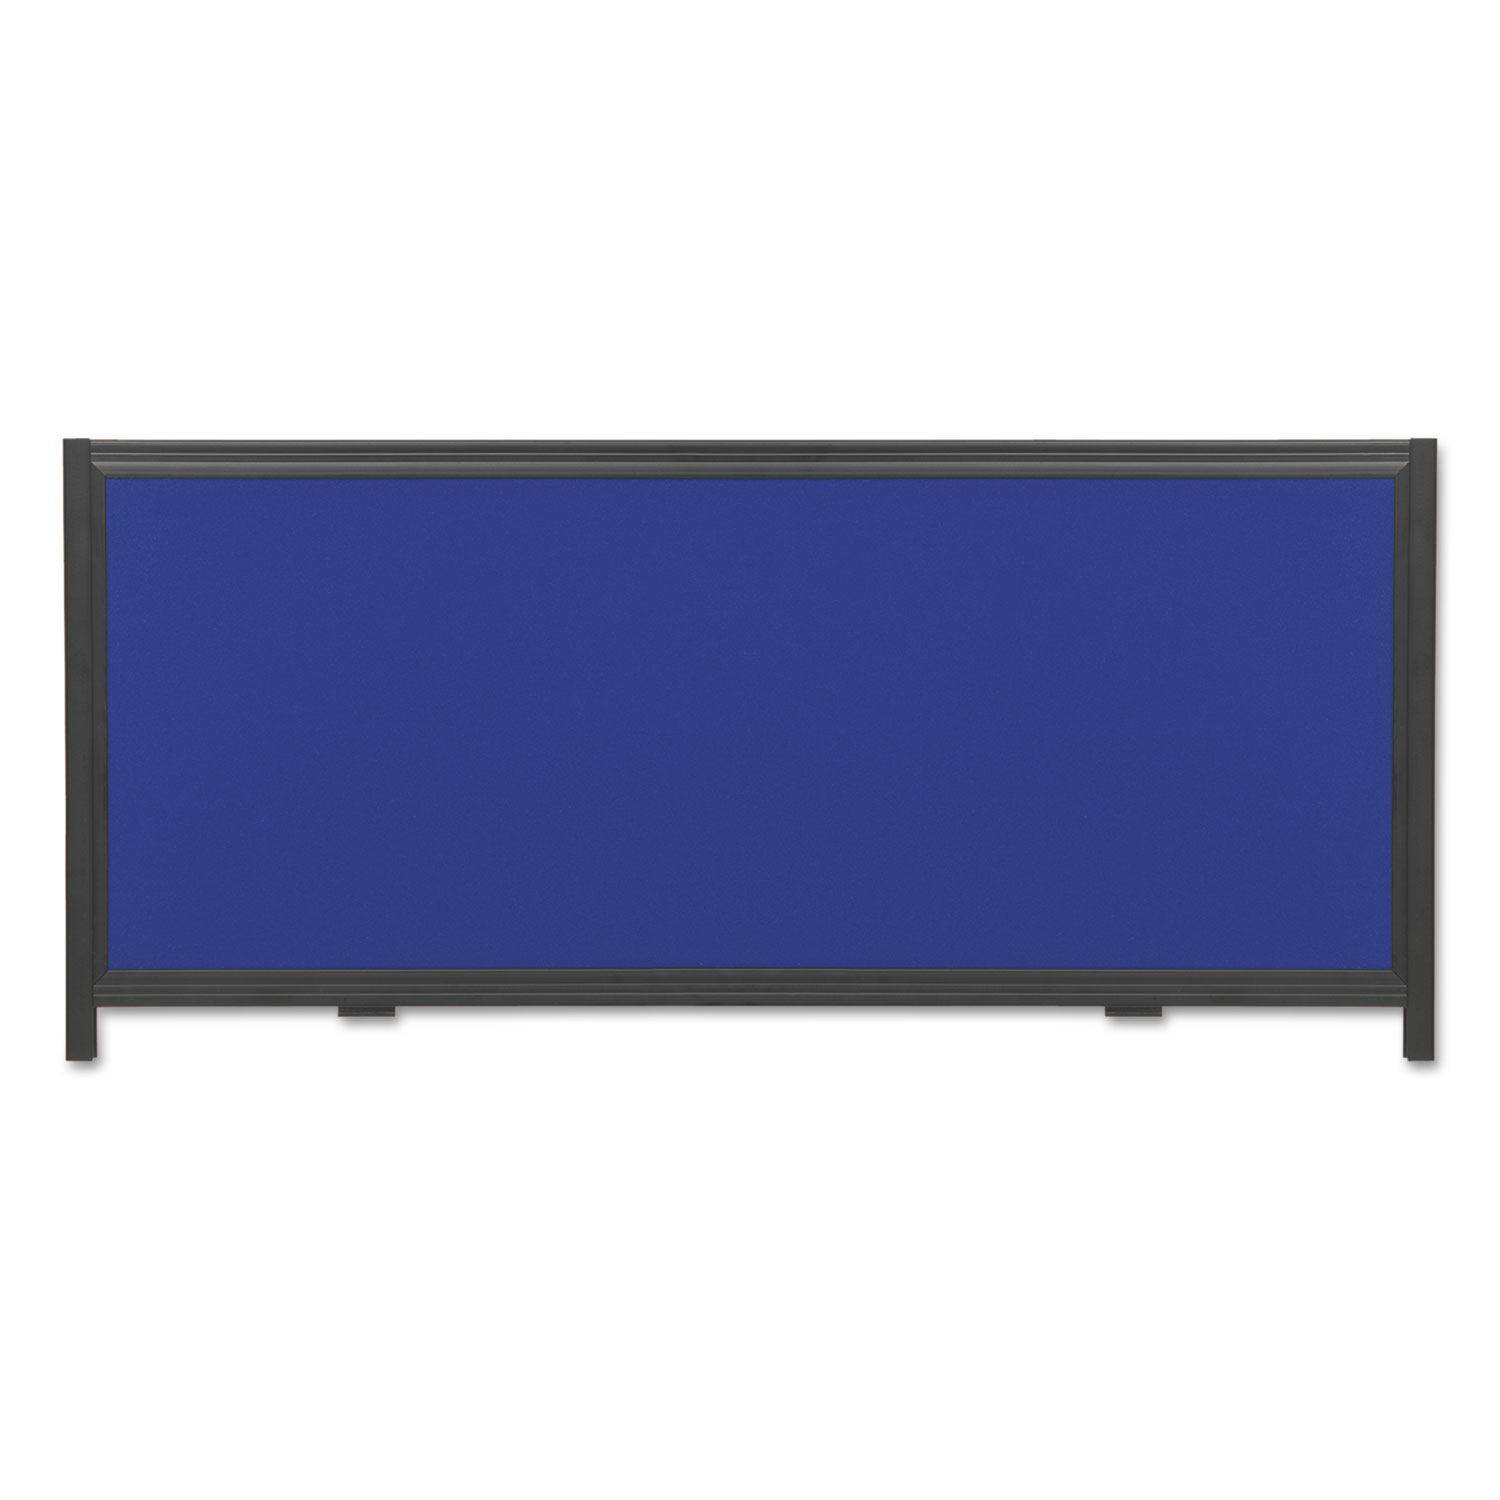 Display System Optional Header Panel, Fabric, 24 x 10, Blue/Gray/Black PVC Frame